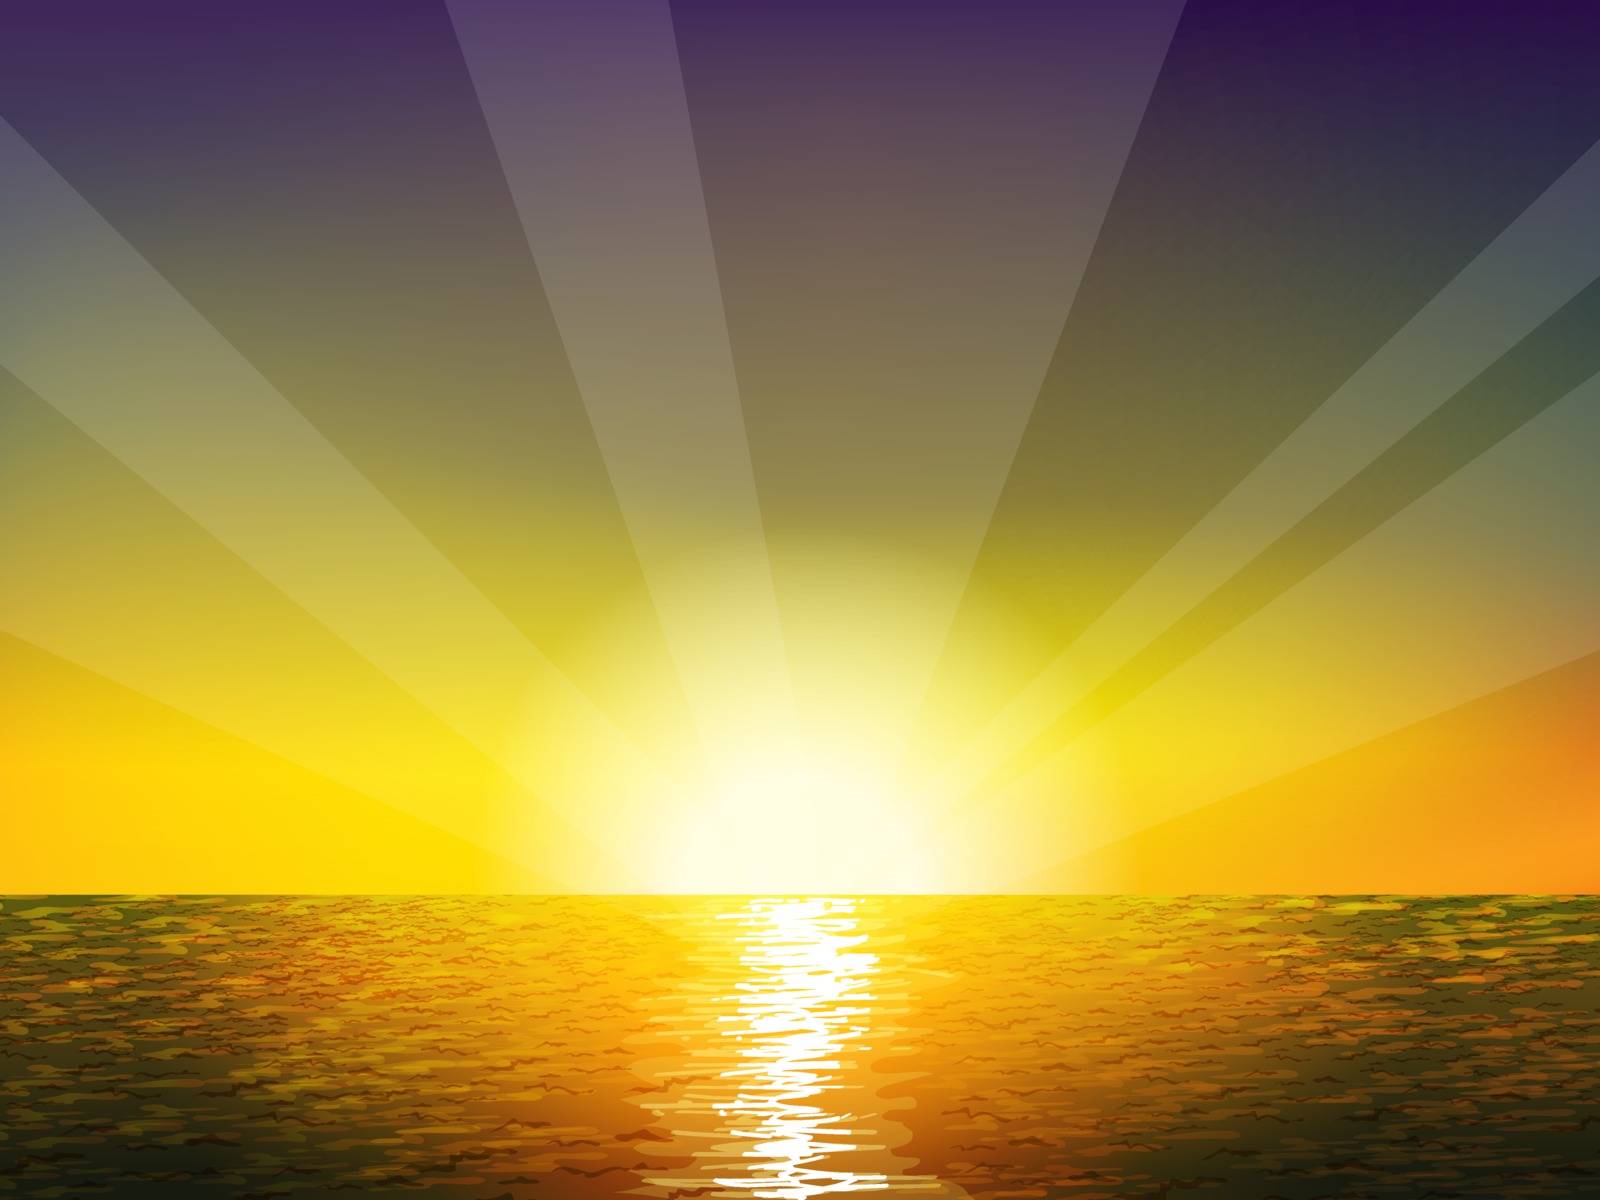 Sunrise on the sea. Background with sun, light and sea